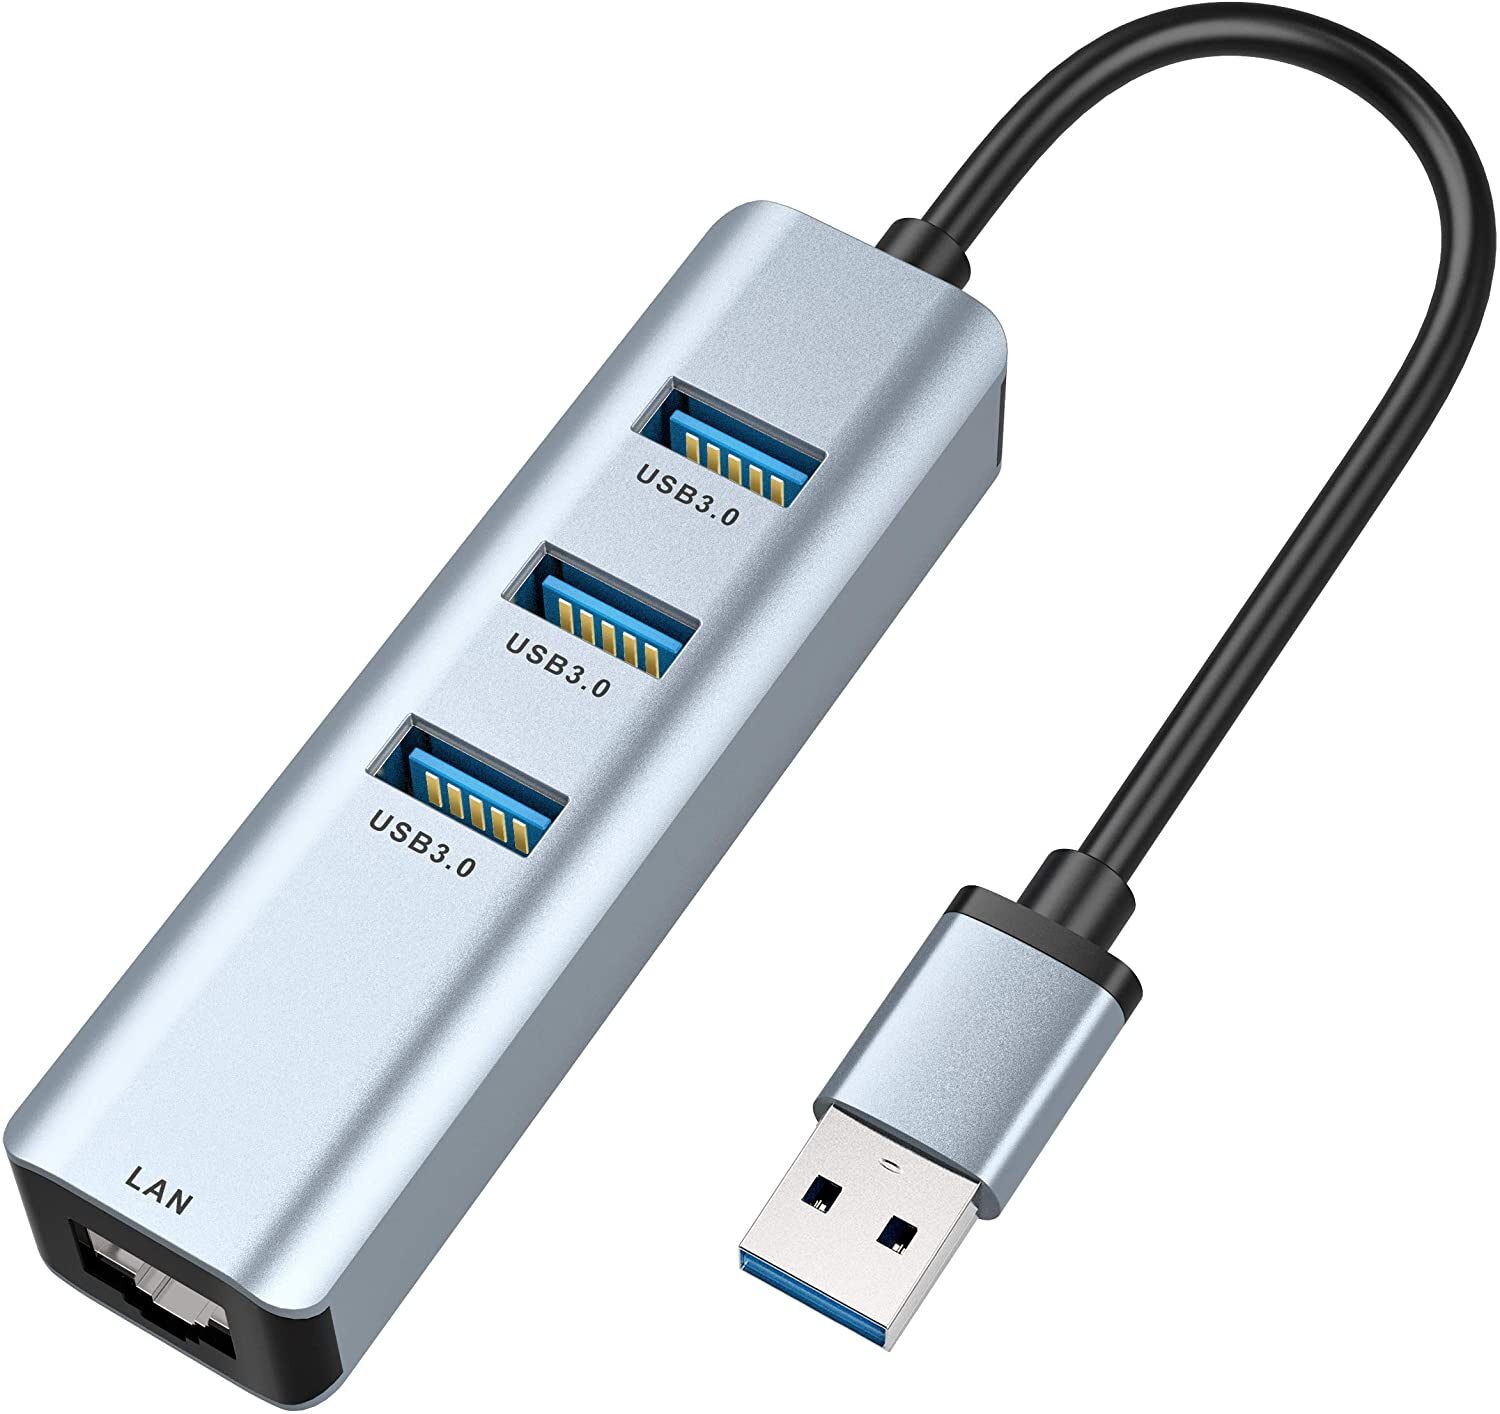 USB 3.0 Ethernet Adapter,ABLEWE 3-Port Hub with RJ45 10/100/1000 Gigabit Ethernet Adapter Support Windows 10,8.1,Mac OS, Surface Pro,Linux,Chromebook More